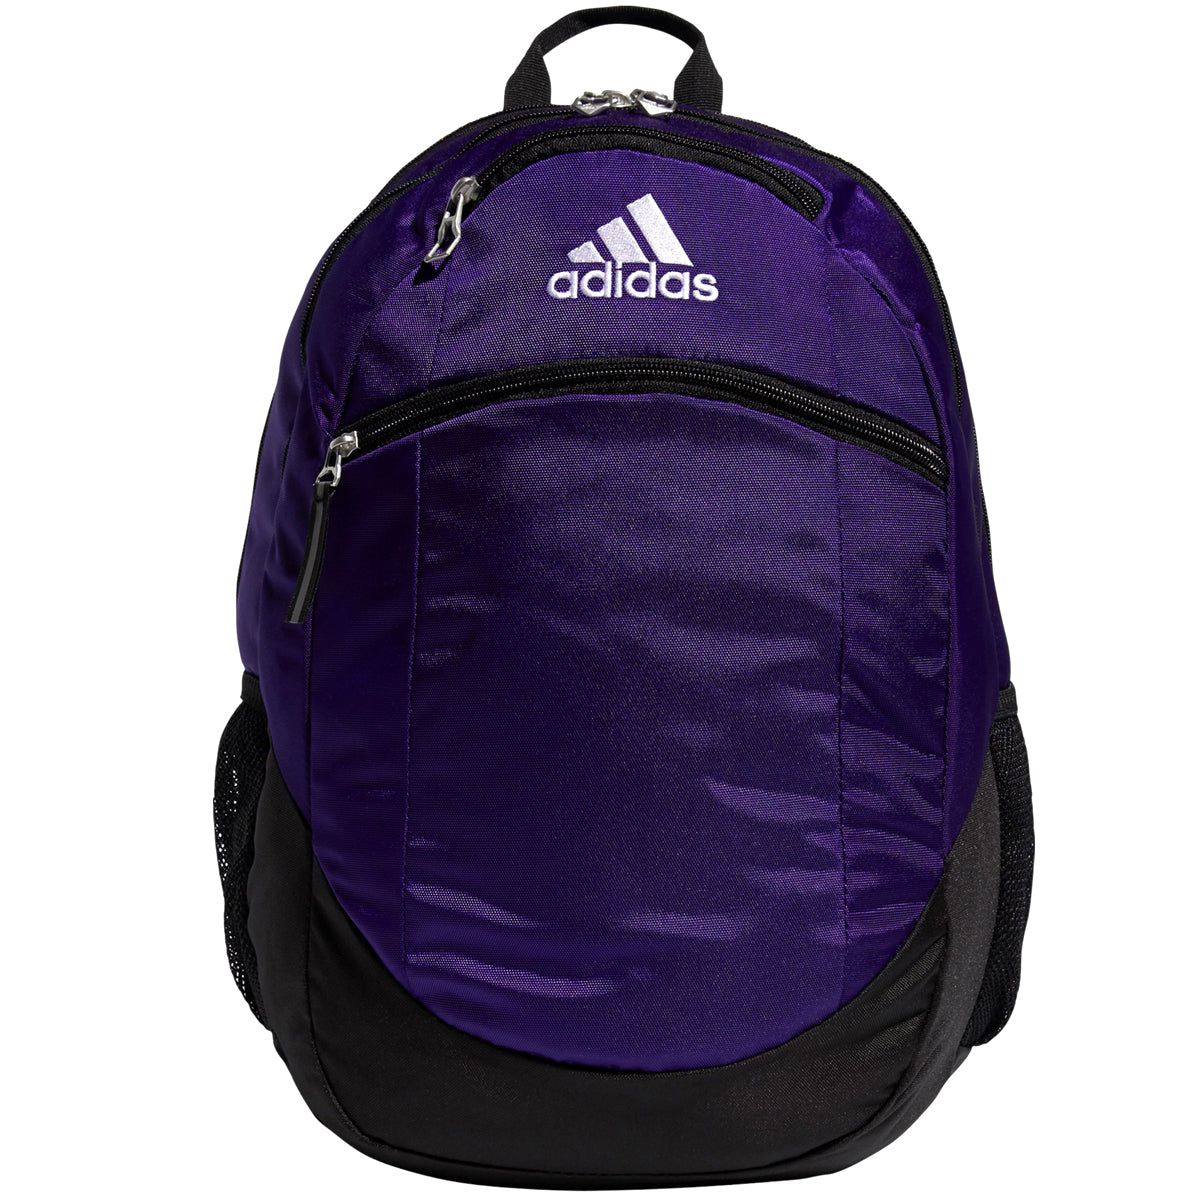 adidas Striker II Team Backpack Bags Adidas One Size Collegiate Purple/Black/White 